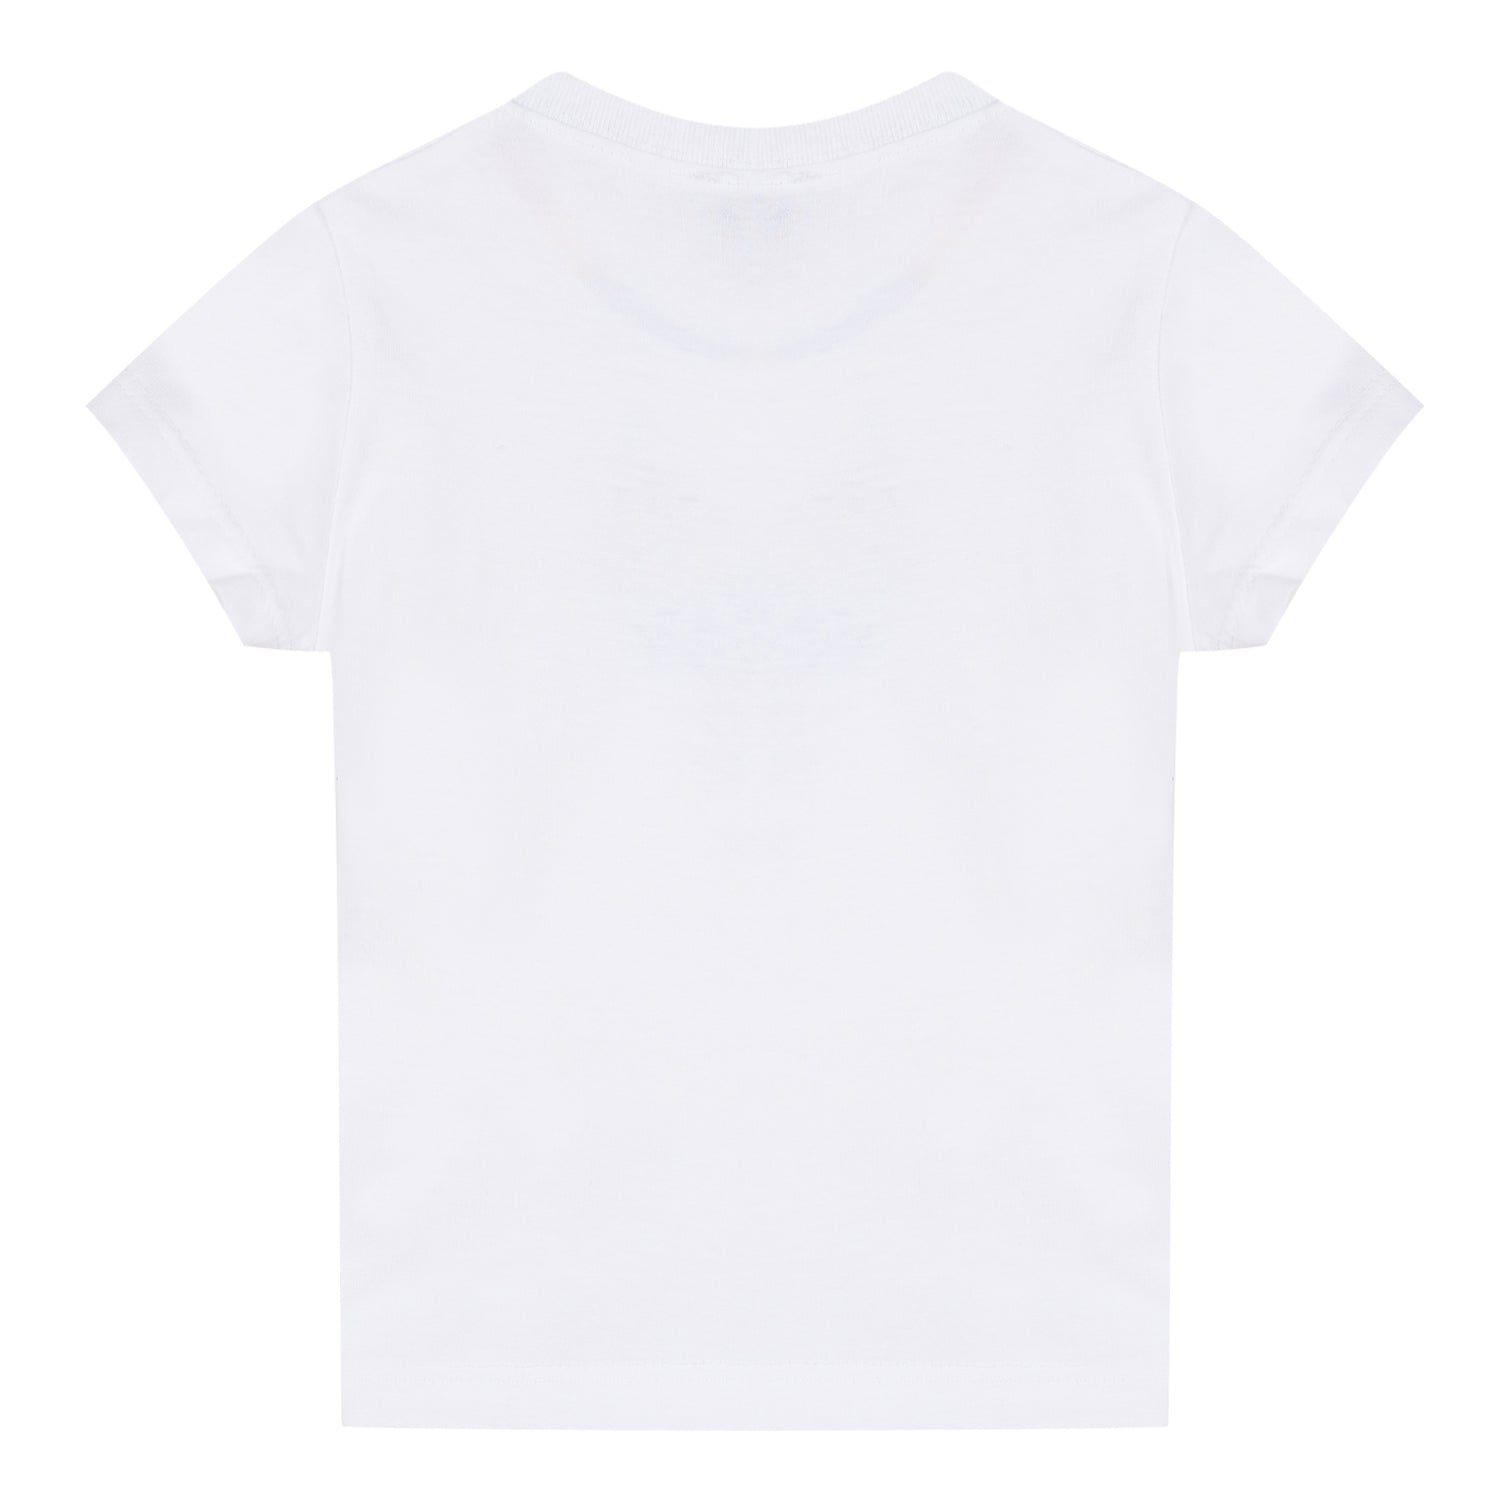 Baby Boys White Printed Cotton T-shirt